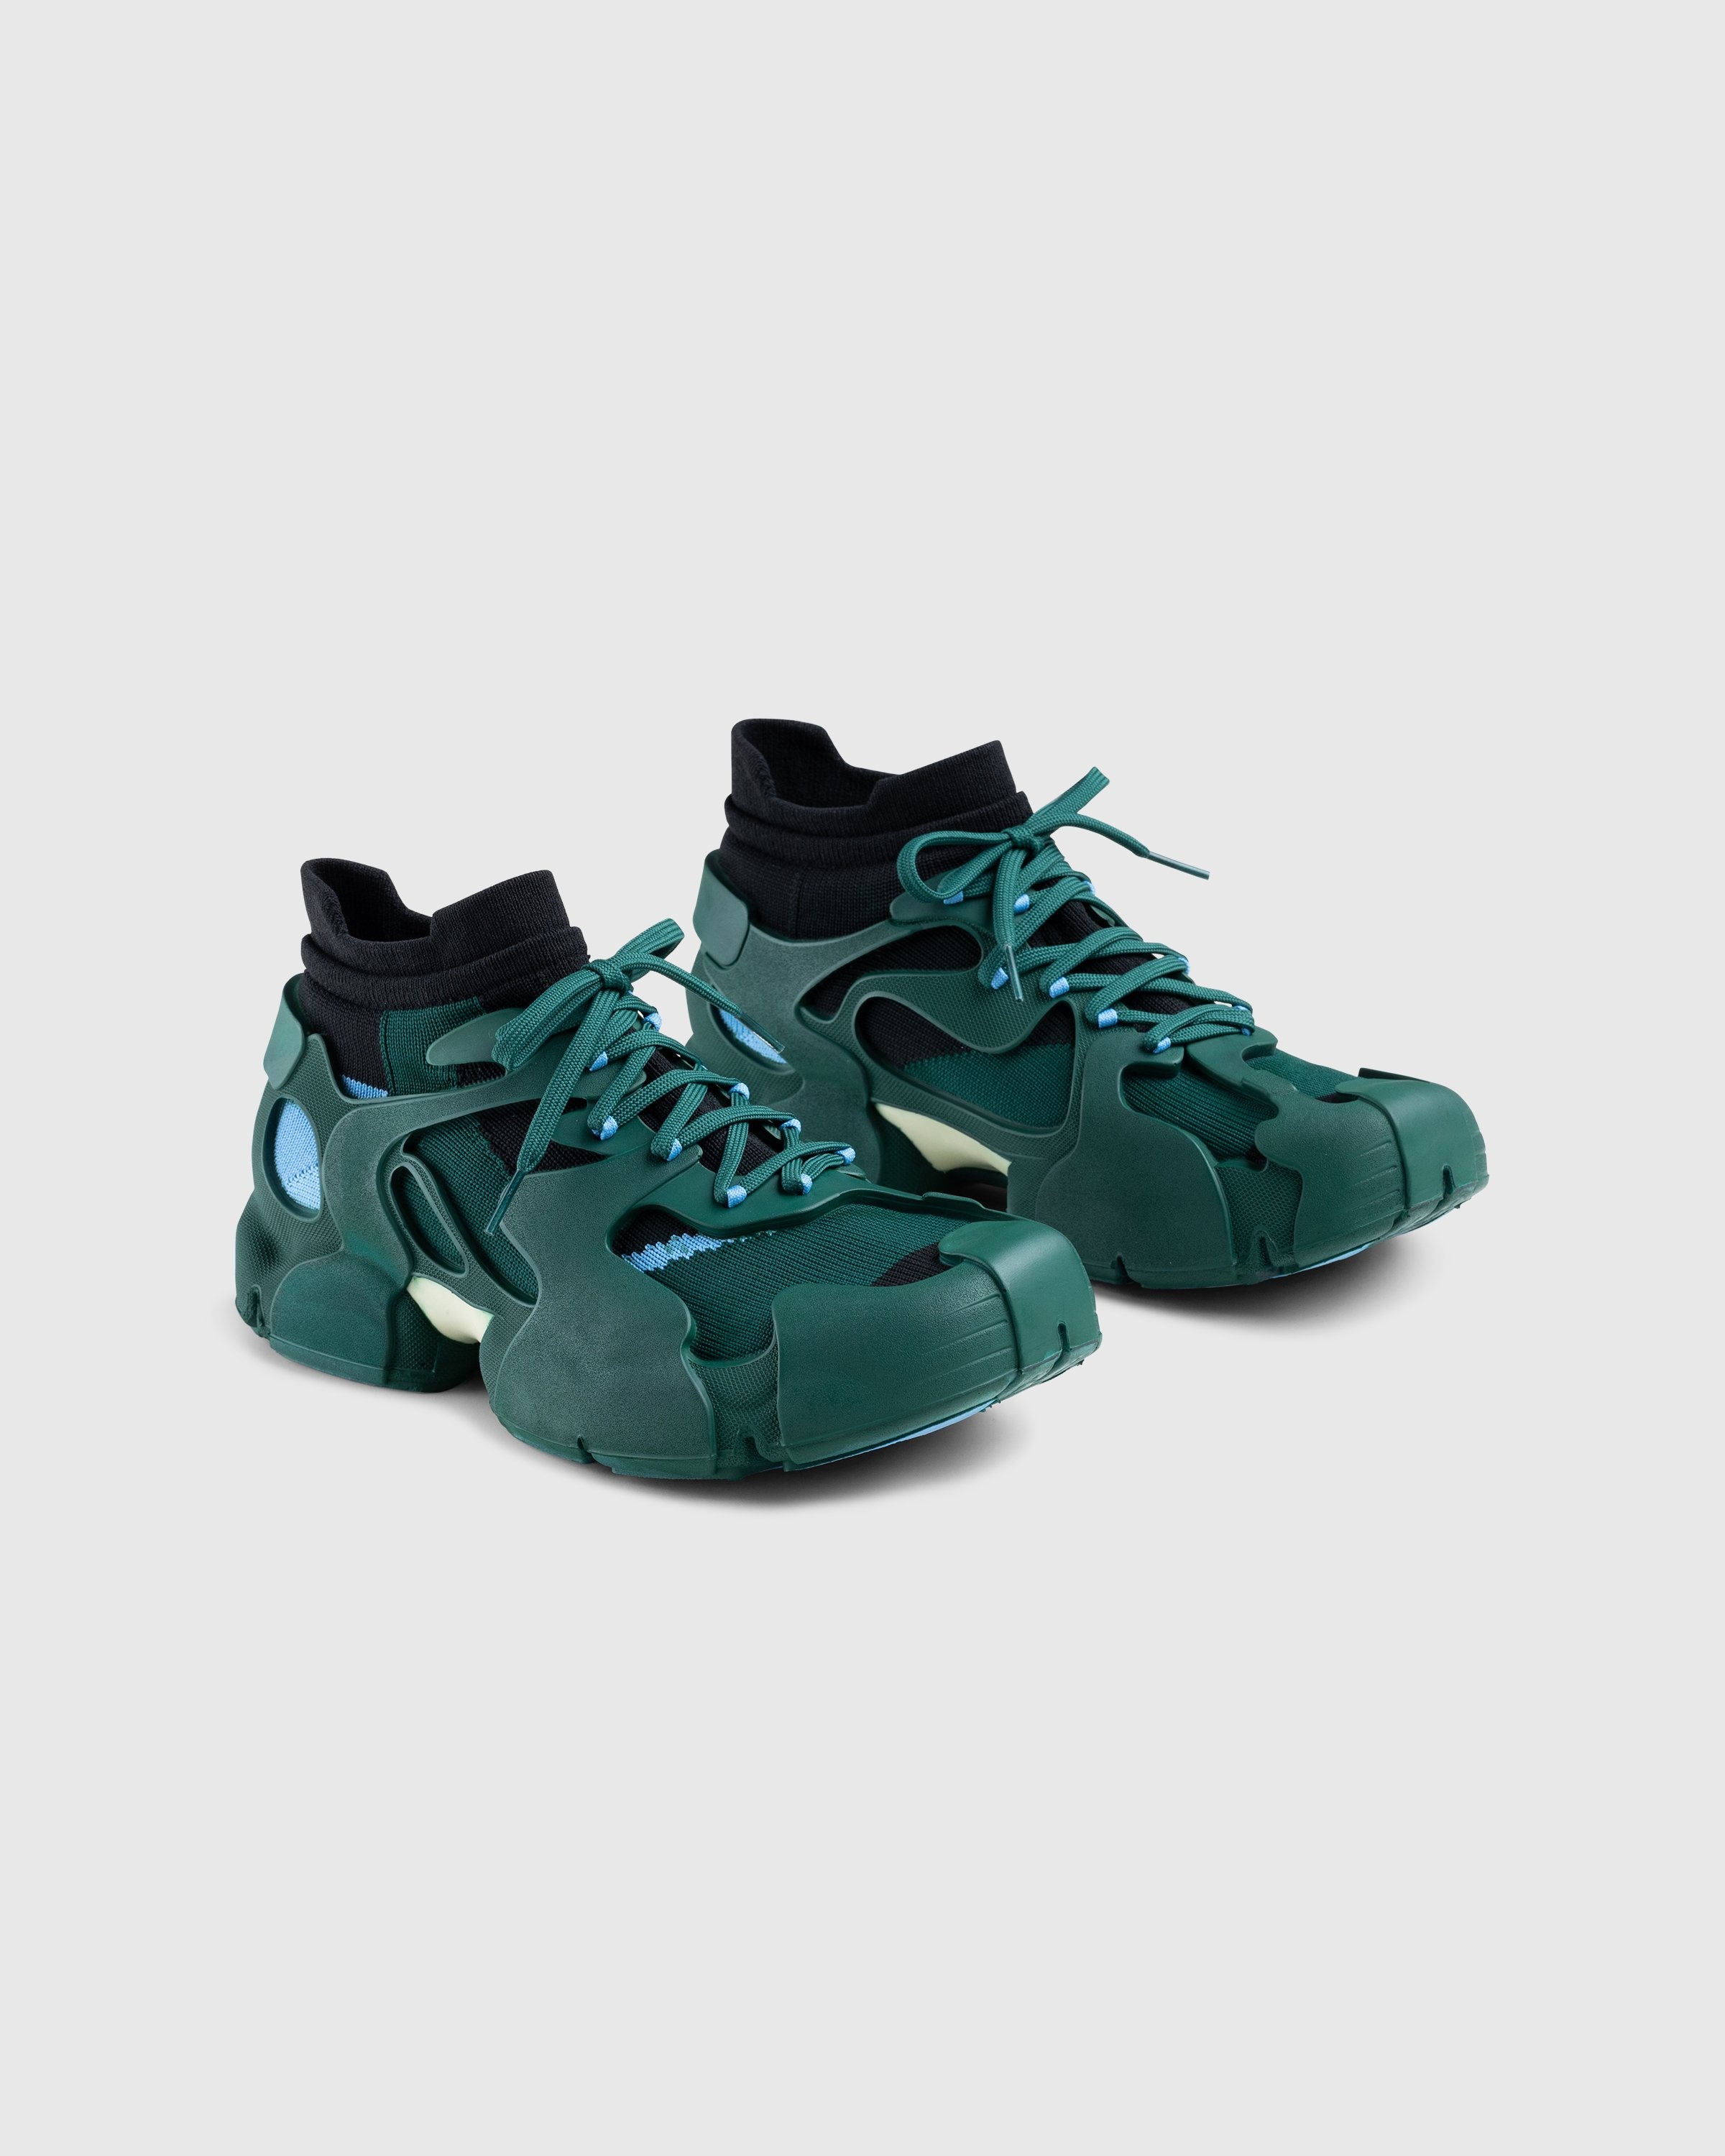 CAMPERLAB – Tossu Green - High Top Sneakers - Green - Image 3